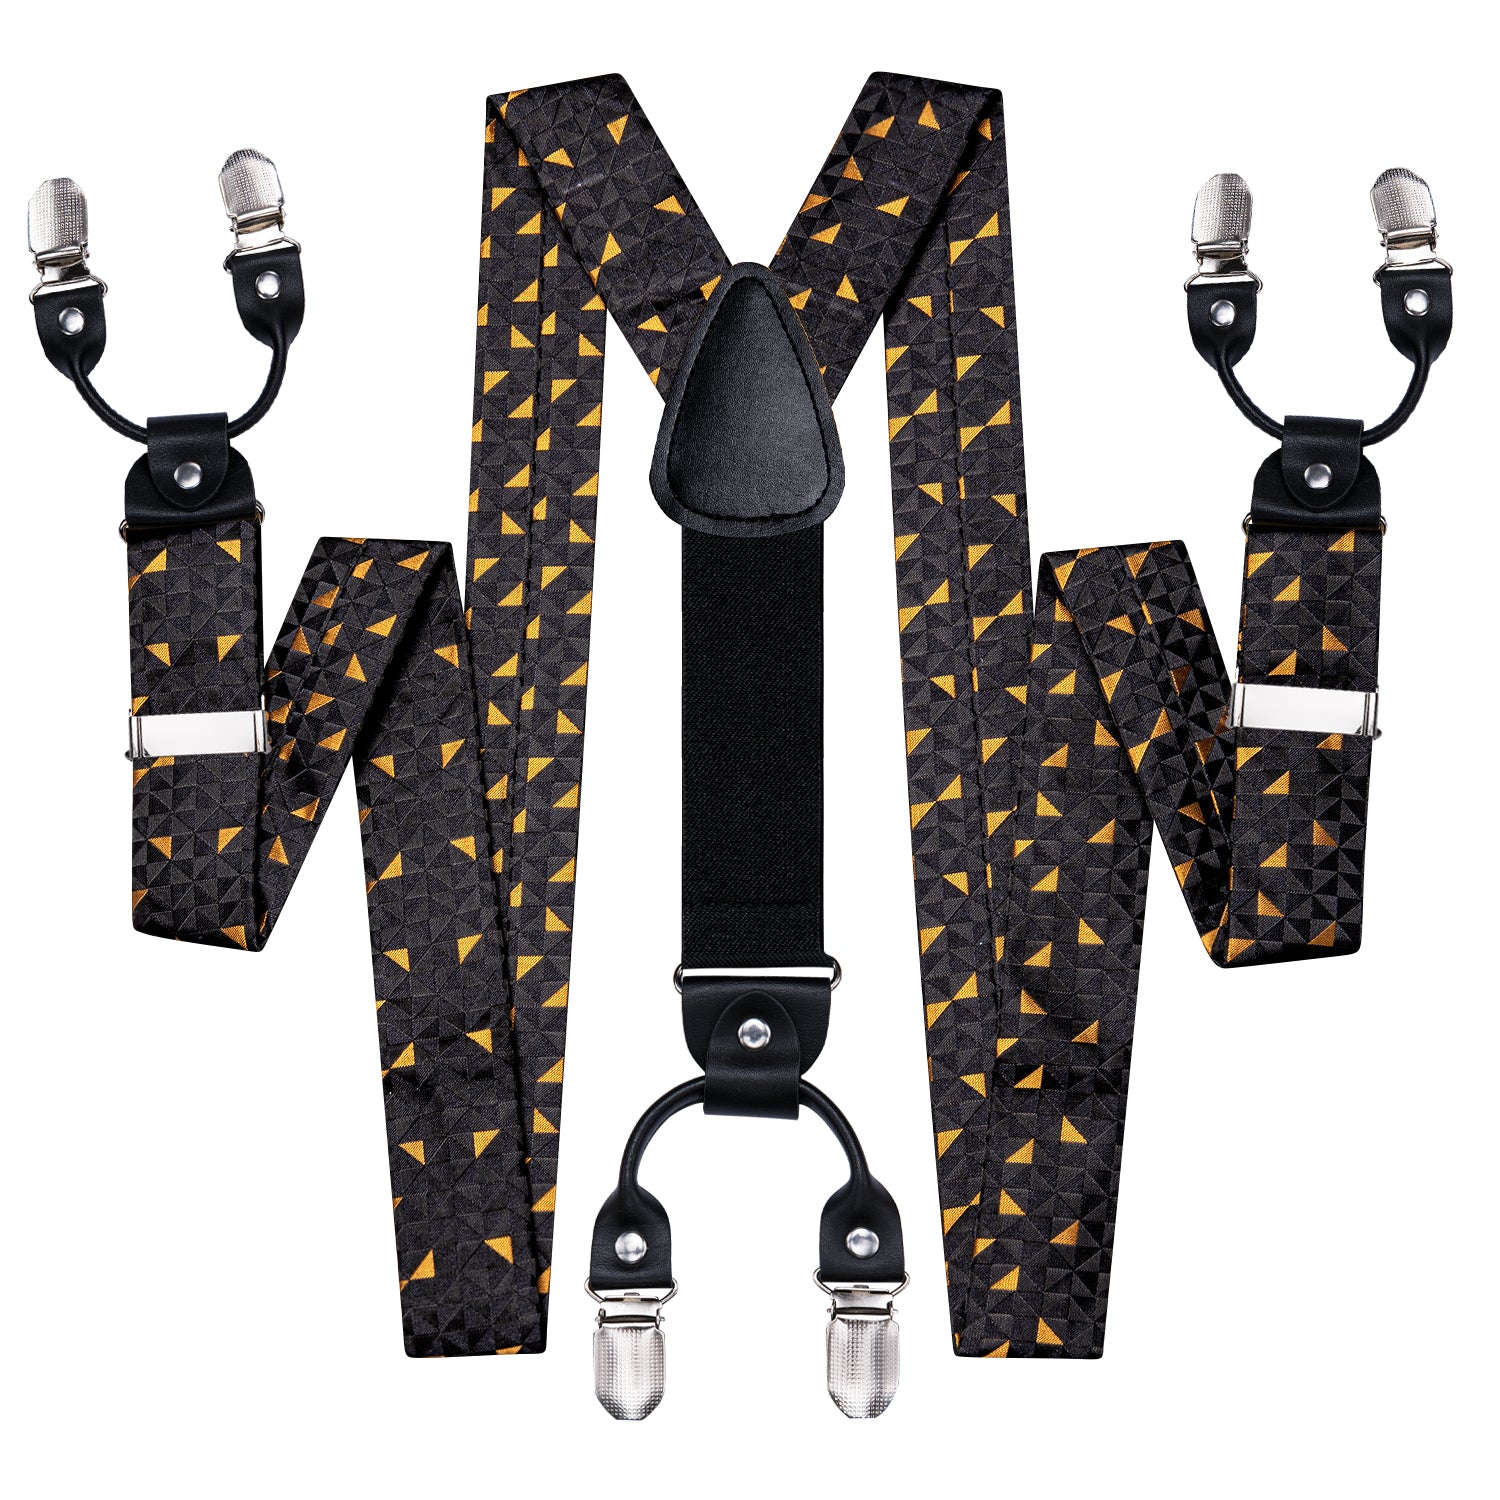 Black Yellow Novelty Men's Suspender Bowtie Pocket Square Cufflinks Set